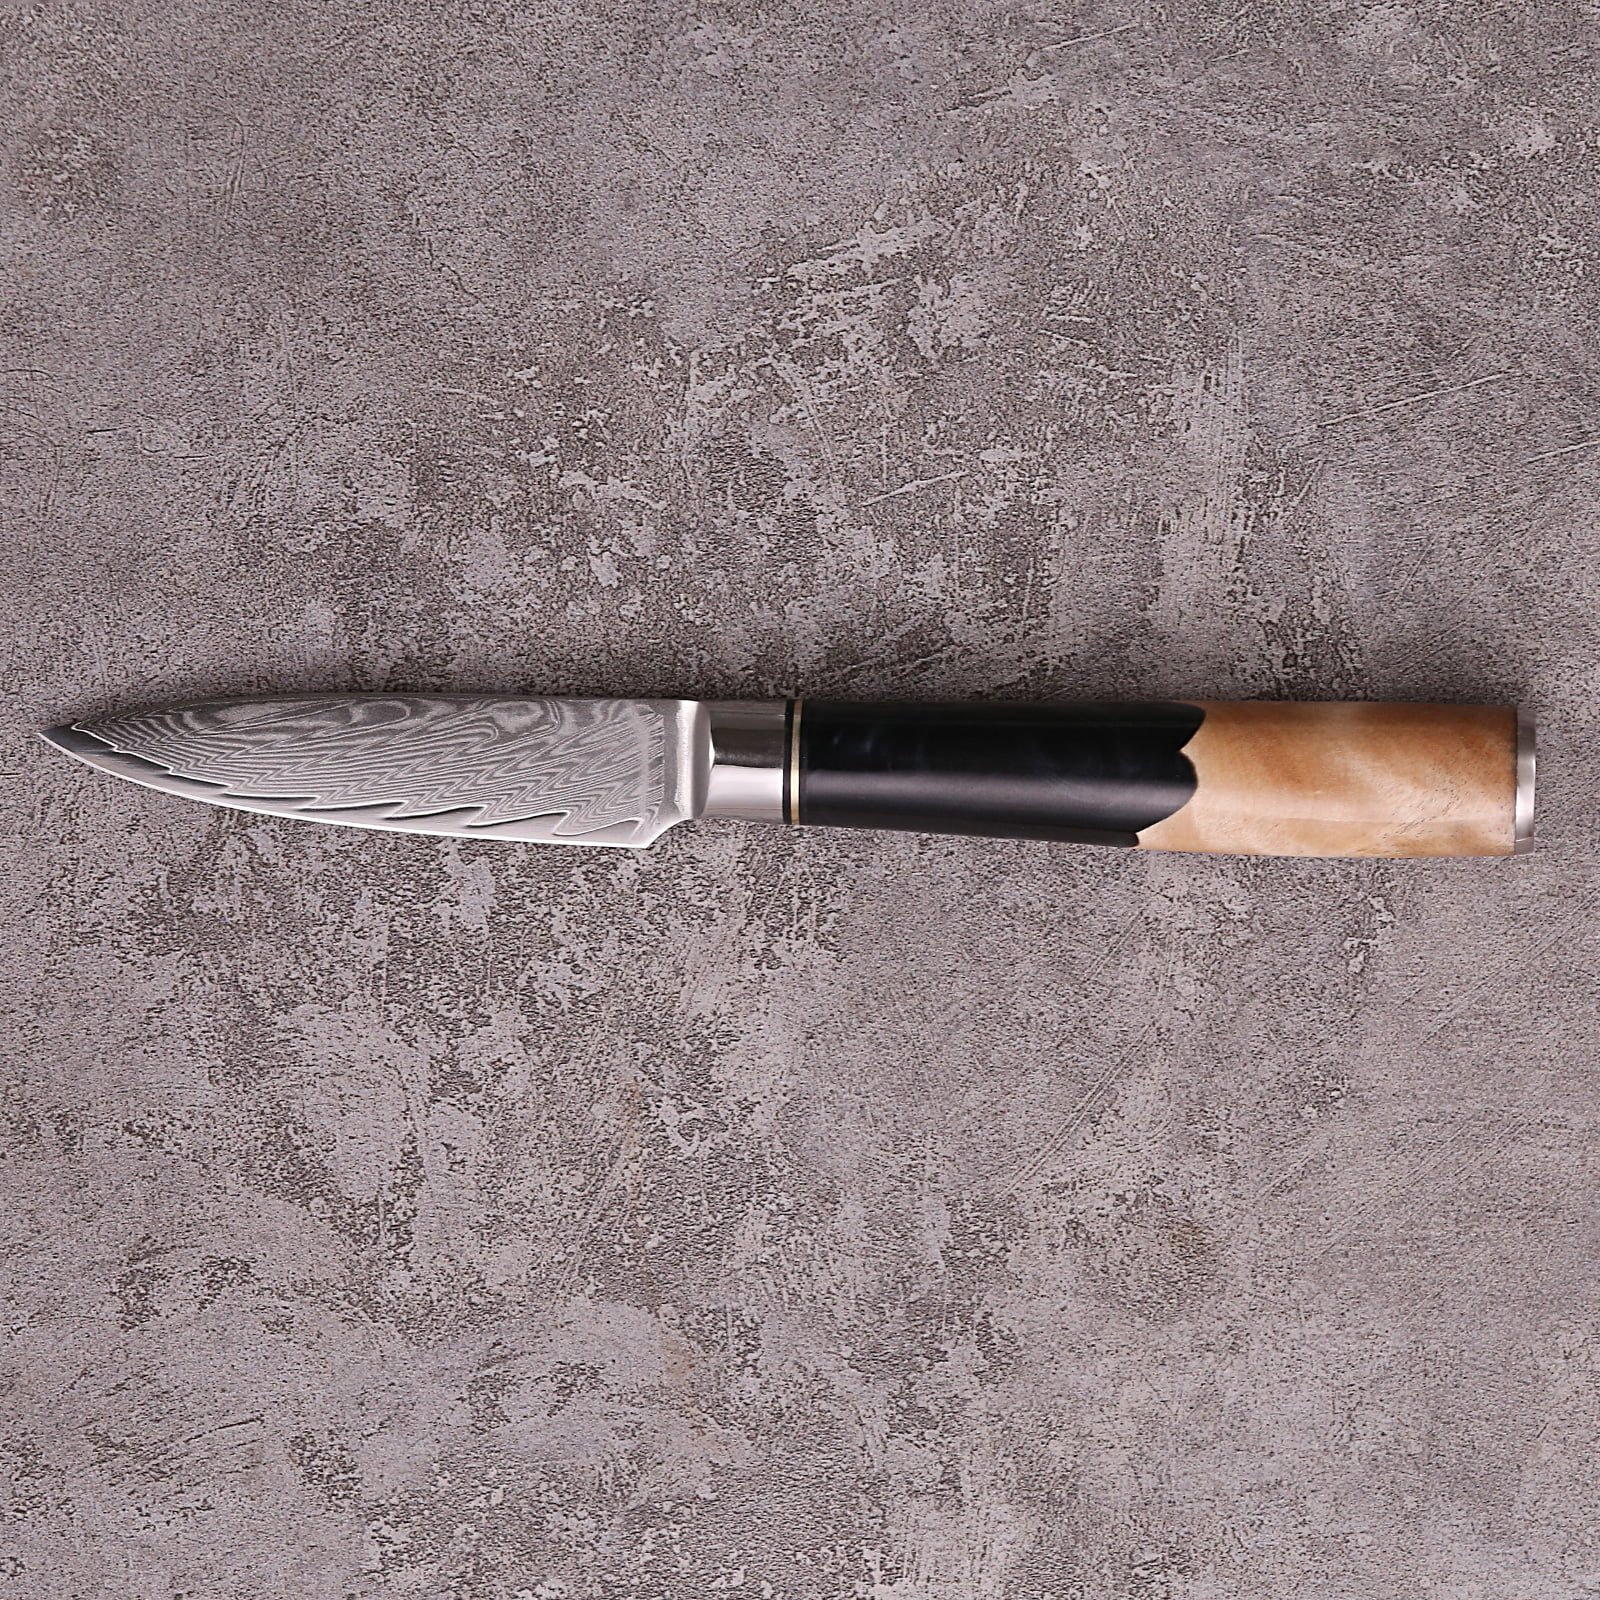 Custom Engraving Paring Knife